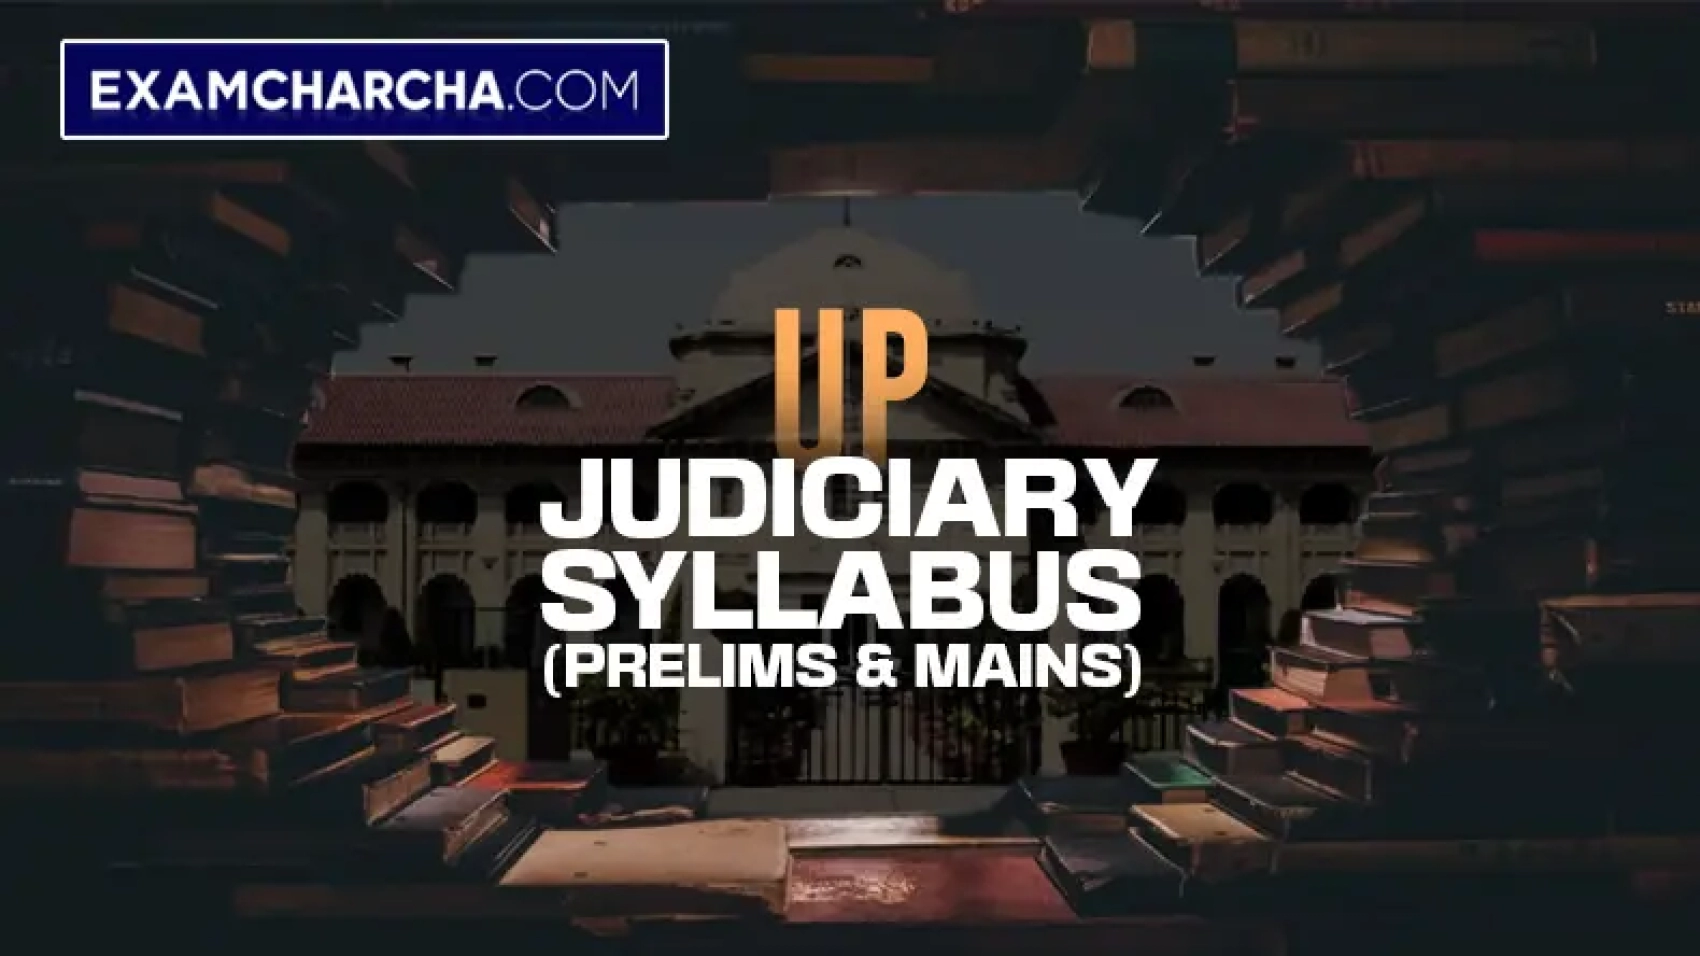 UP Judiciary Syllabus